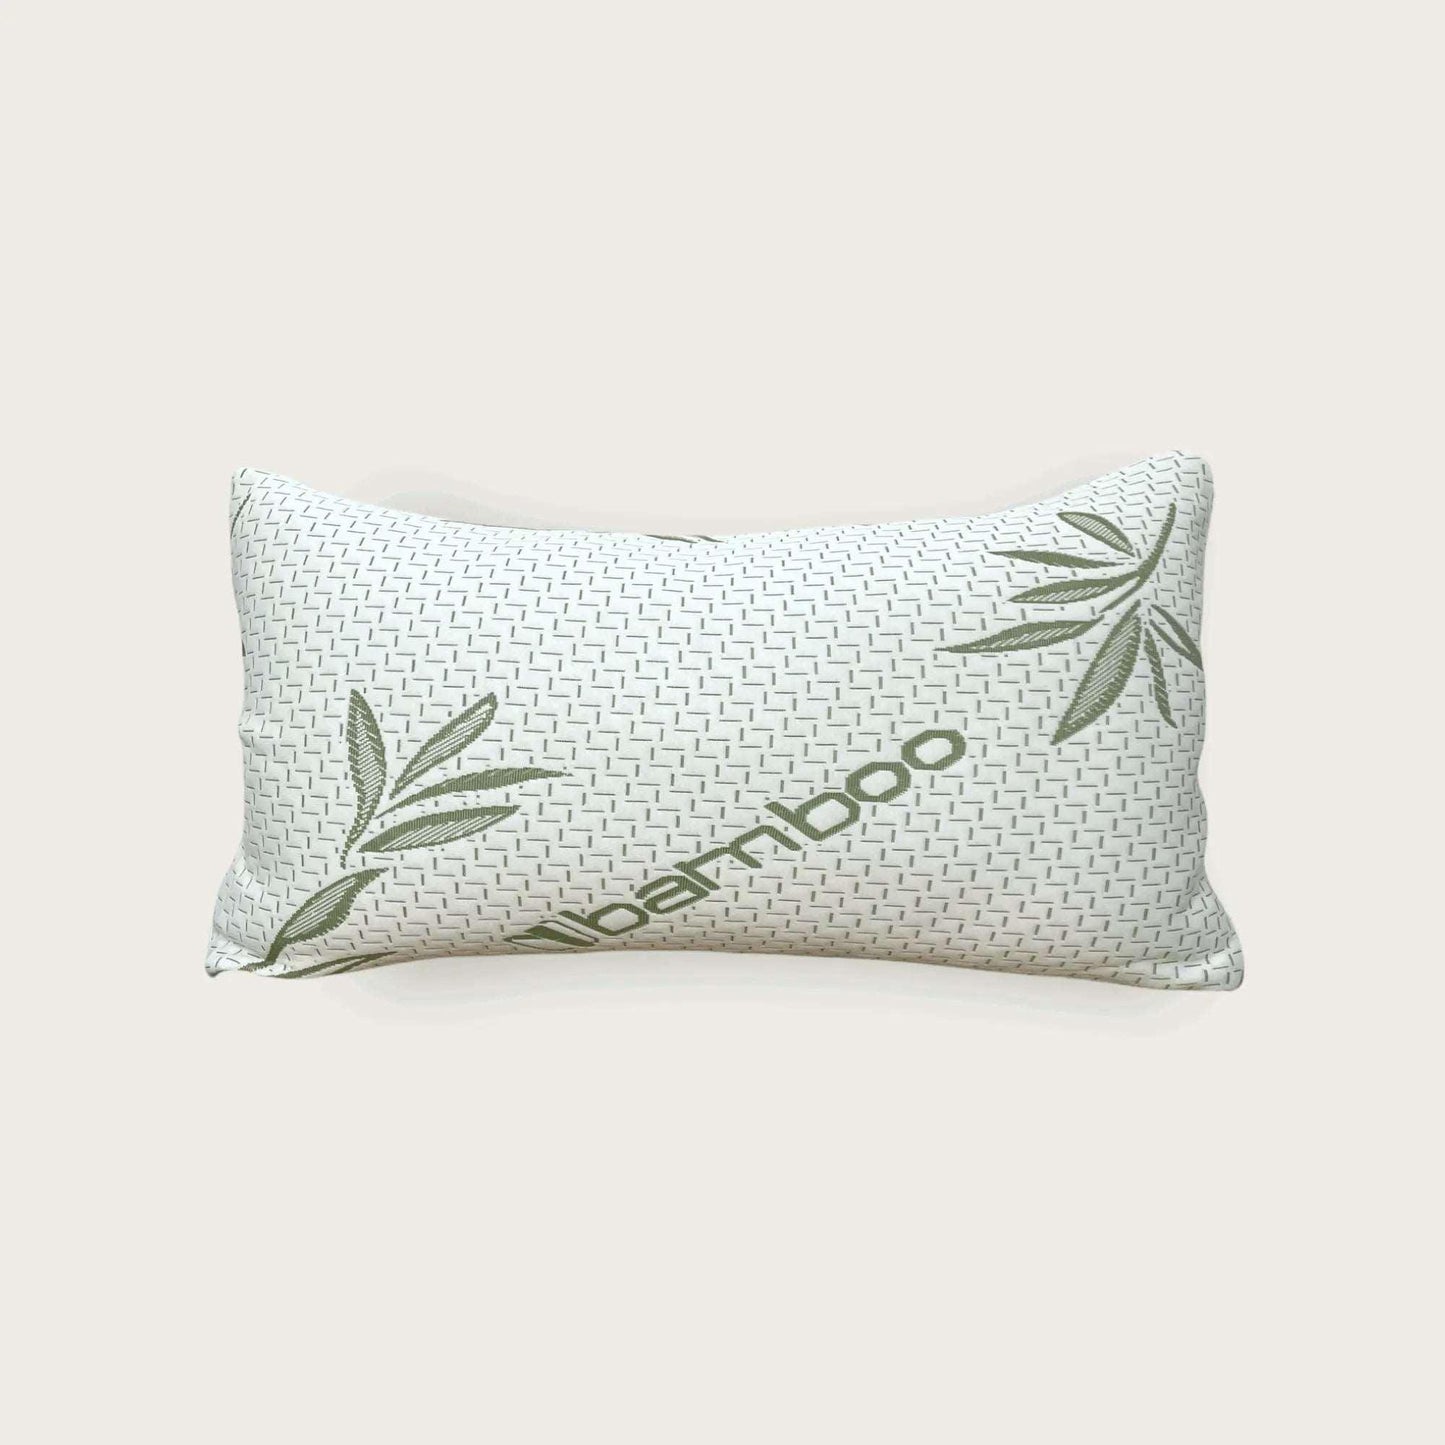 Bamboo Pillow Memory Foam 